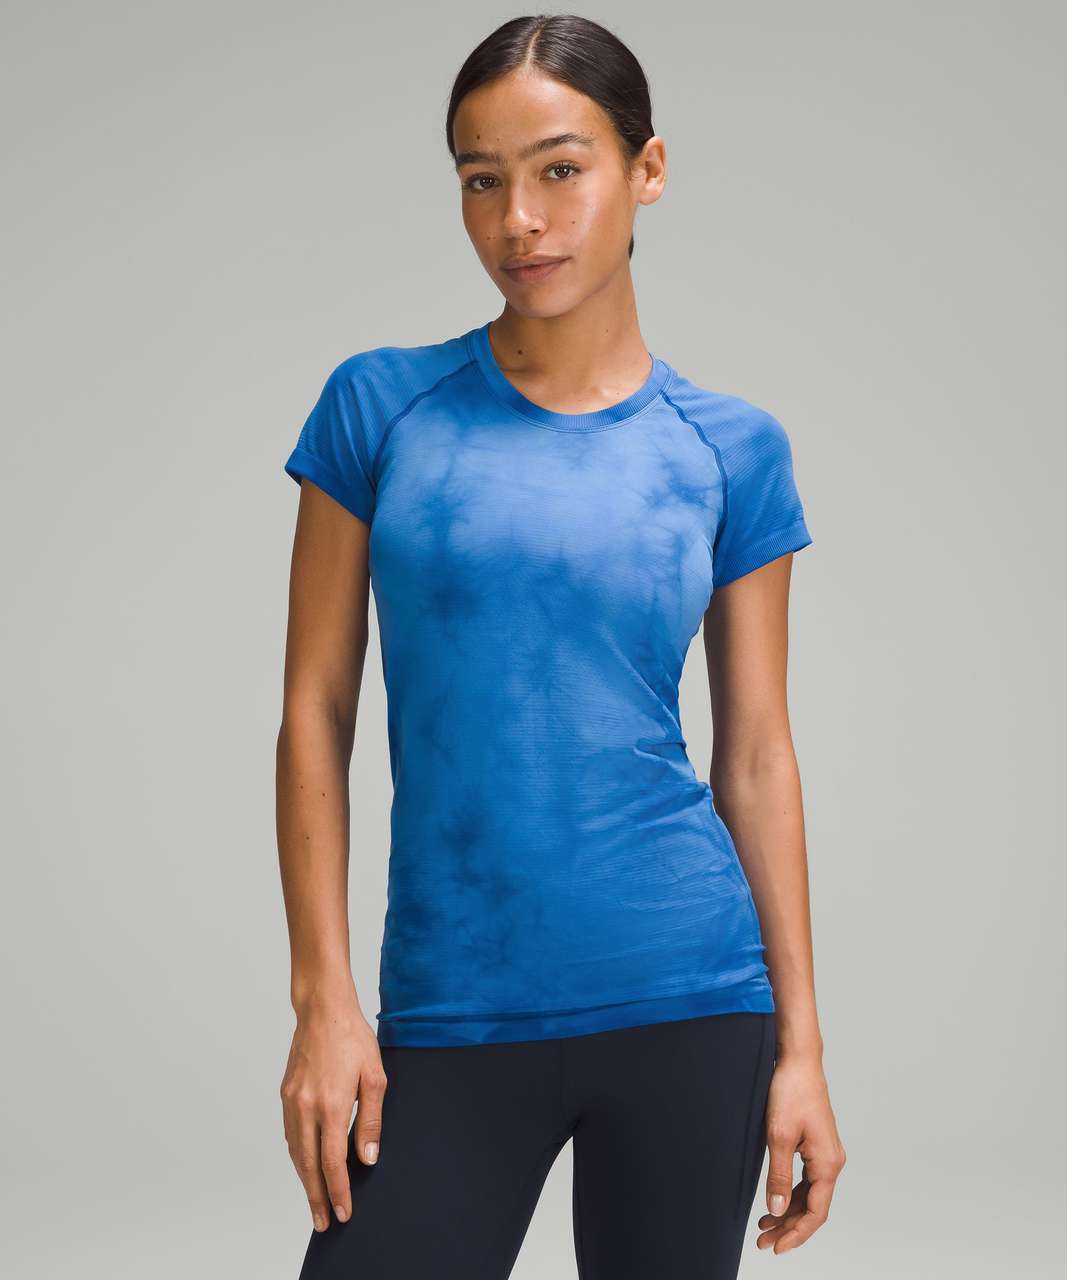 Lululemon Symphony Blue Swiftly Tech Short Sleeve Shirt 2.0 Size 8 - $65 -  From Kylie